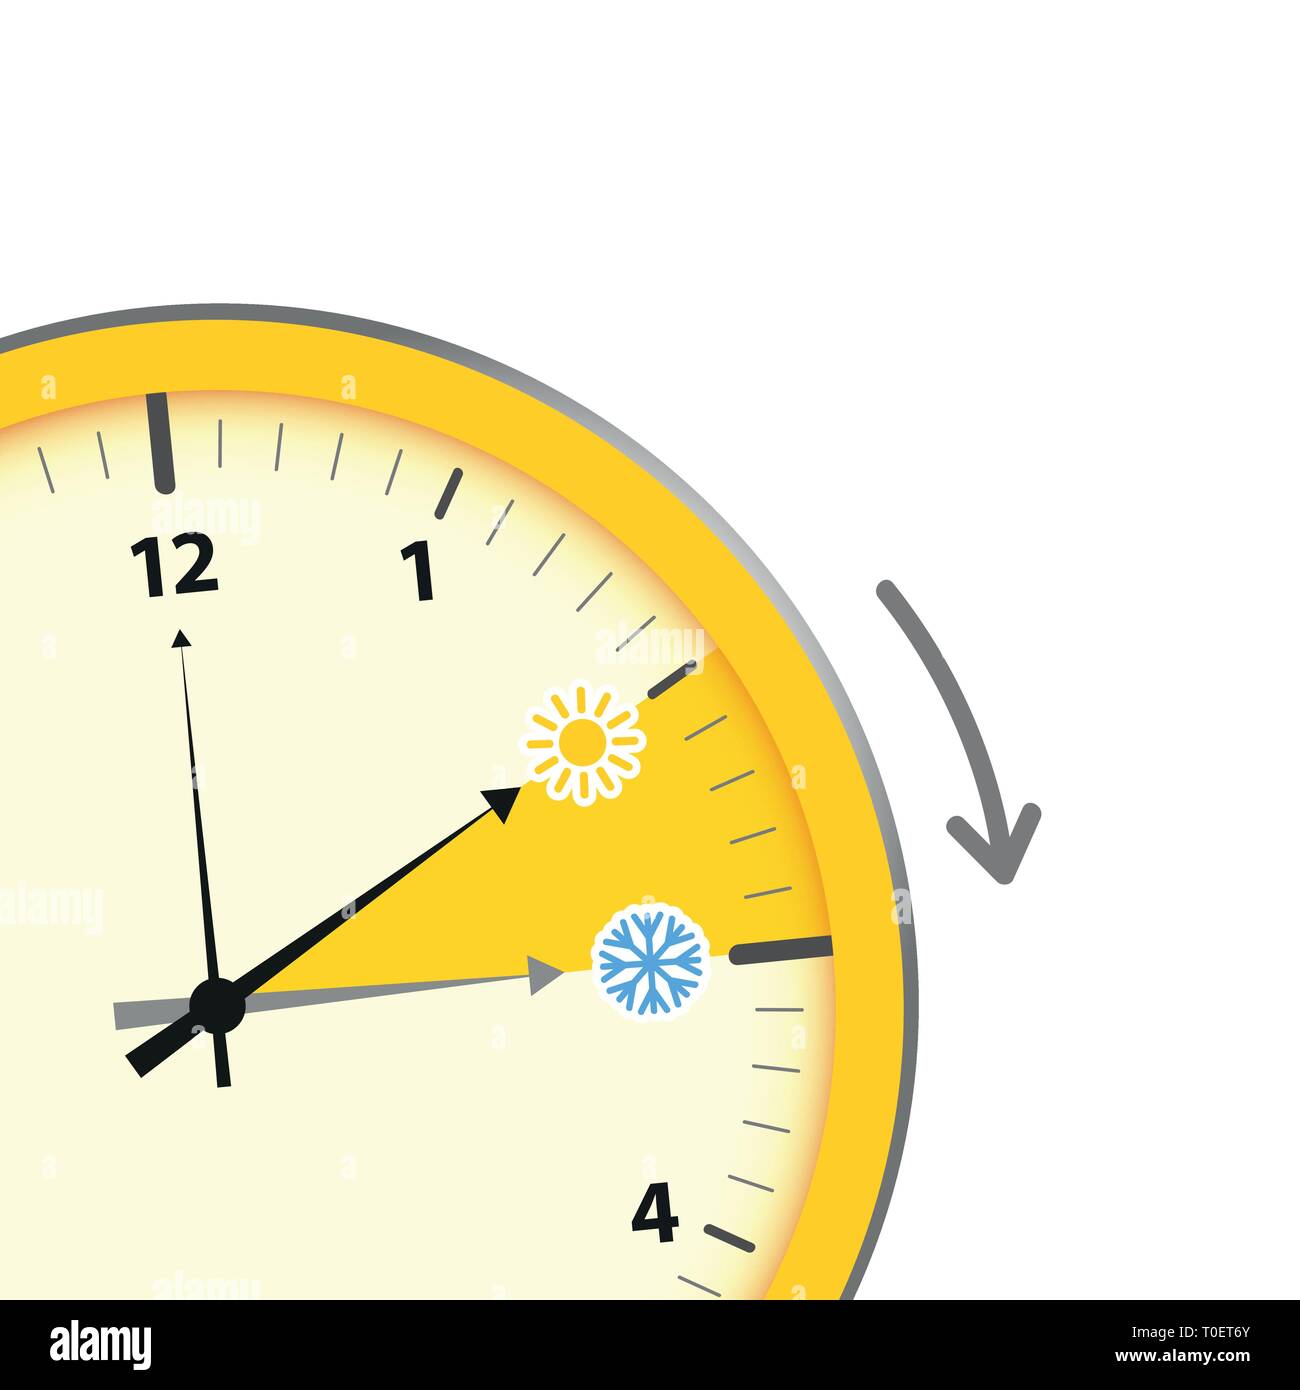 Uhr Sommer mit Sonne und Schneeflocke Vektor-illustration EPS 10. Stock Vektor